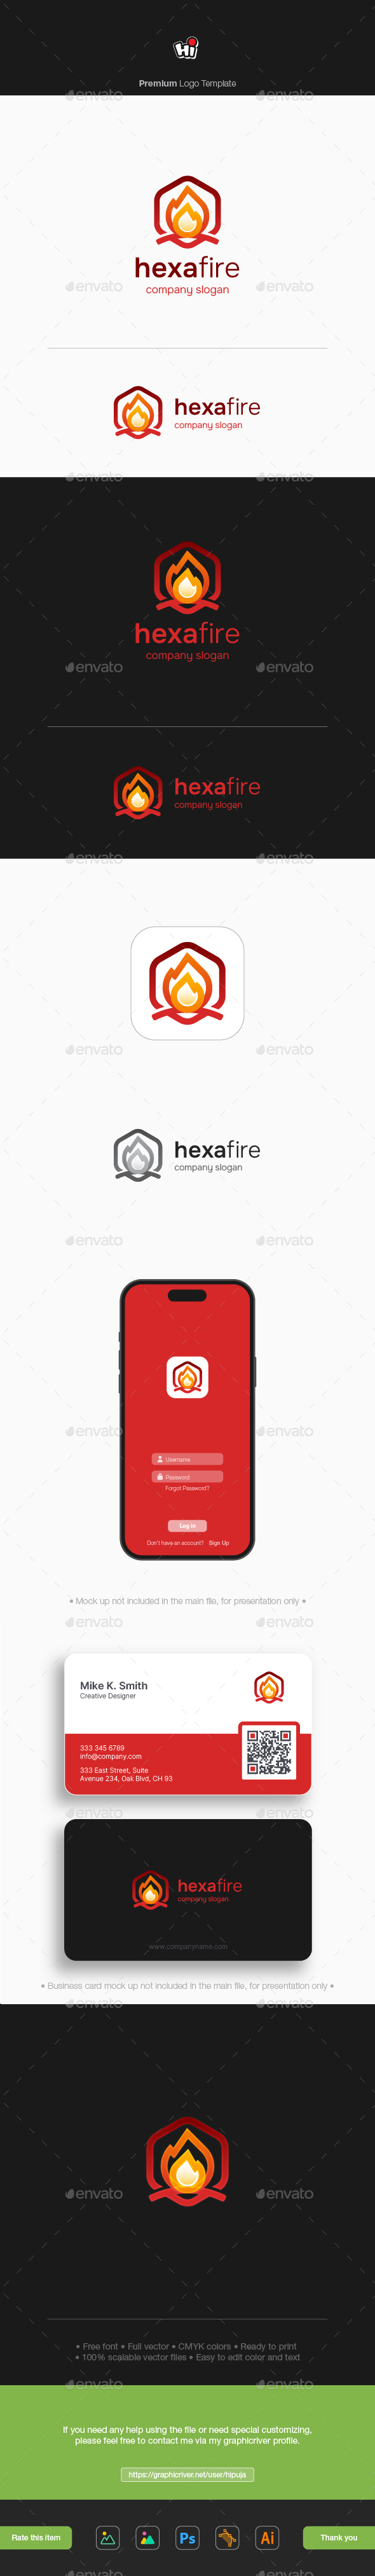 [DOWNLOAD]hexa Fire Logo